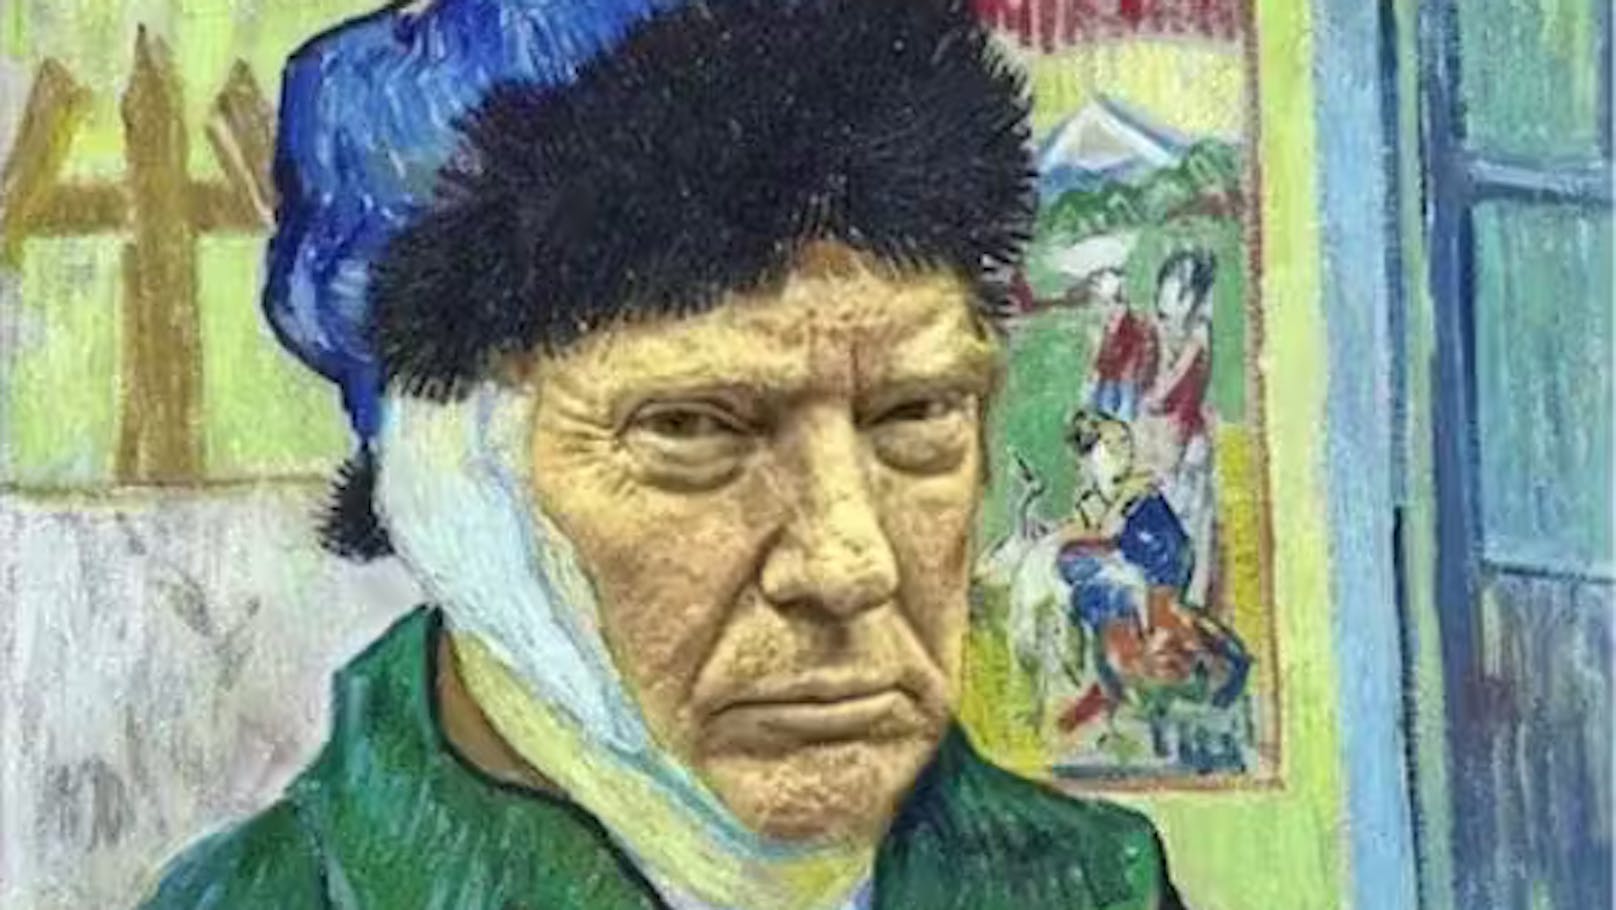 "Trump van Gogh": Darum geht dieses Meme jetzt viral